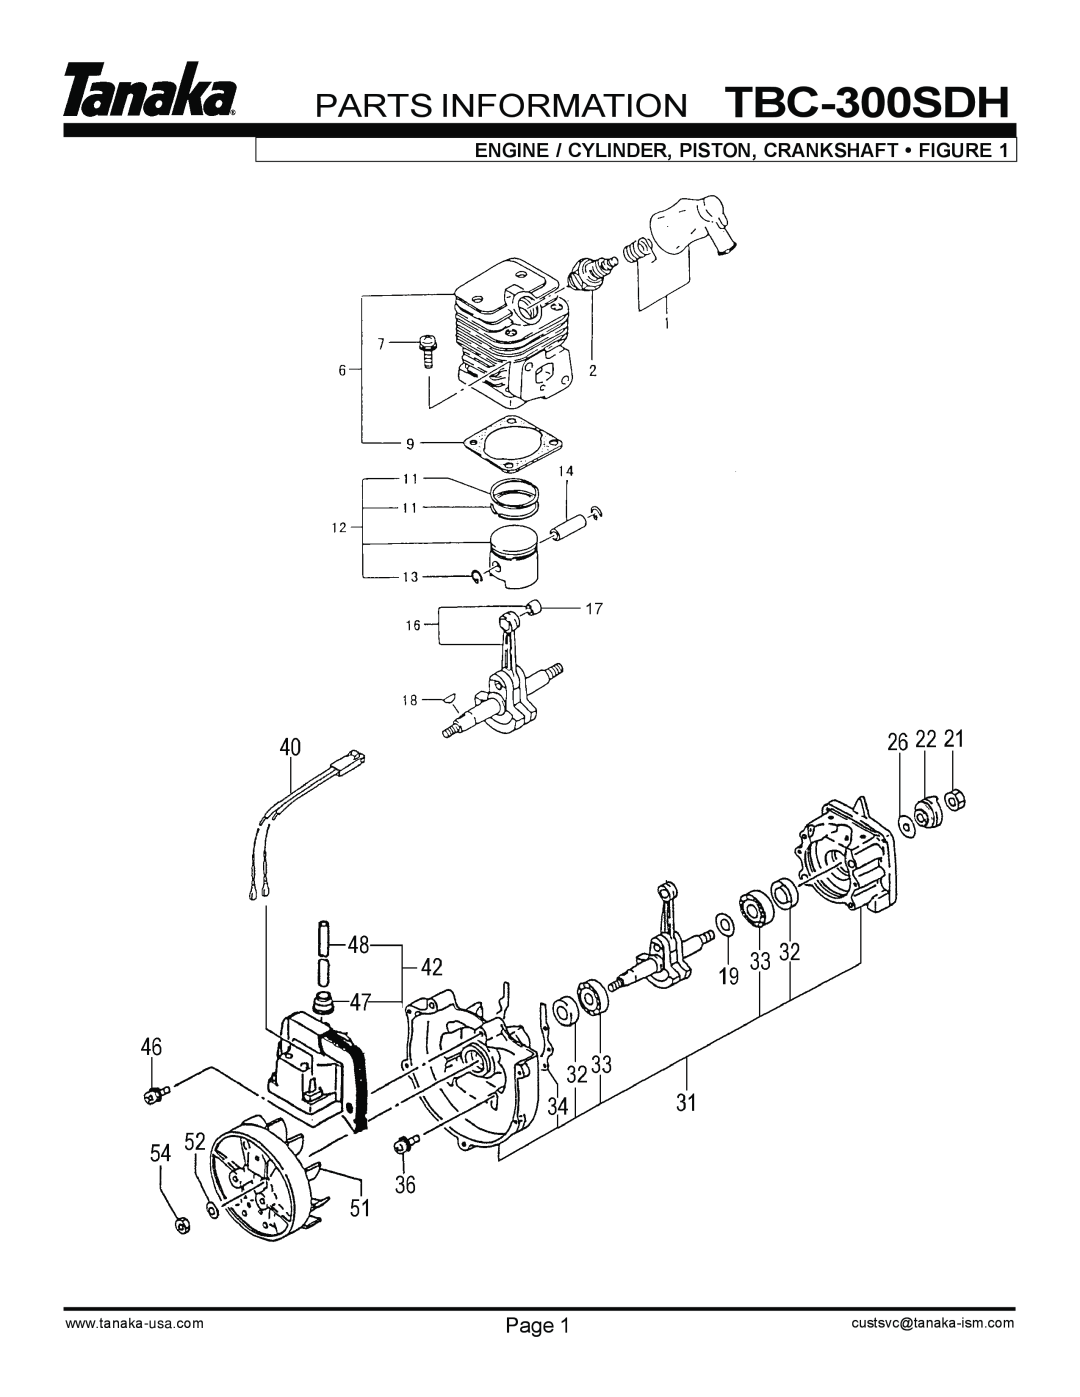 Tanaka manual PARTS INFORMATION TBC-300SDH, Page, Engine / Cylinder, Piston, Crankshaft Figure, custsvc@tanaka-ism.com 